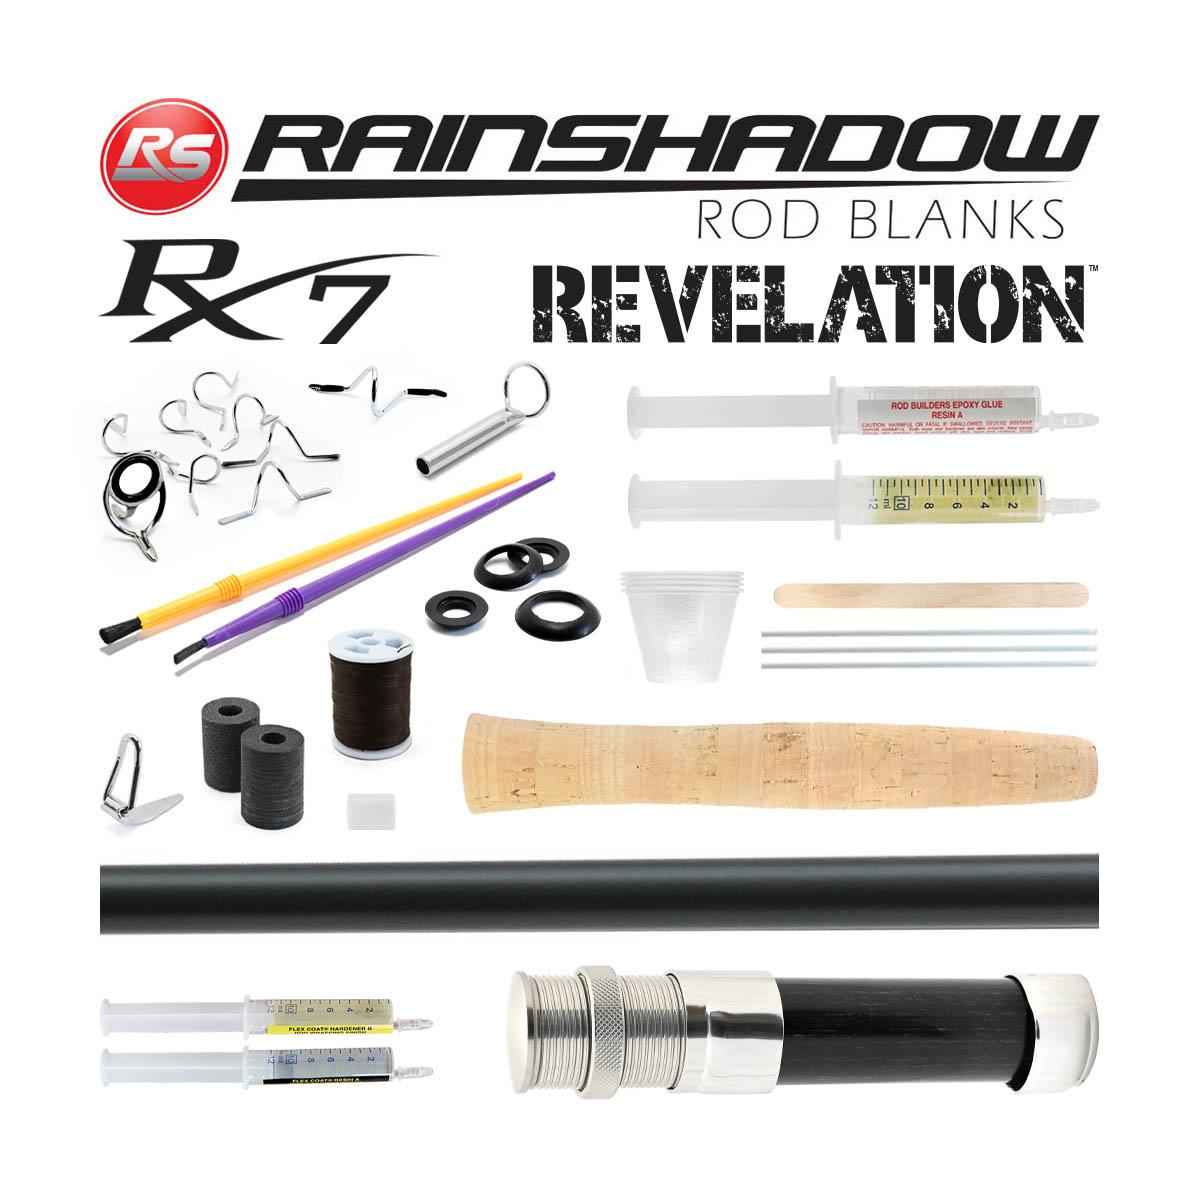 Rainshadow Revelation 2 Piece Fly Rod Building Kits